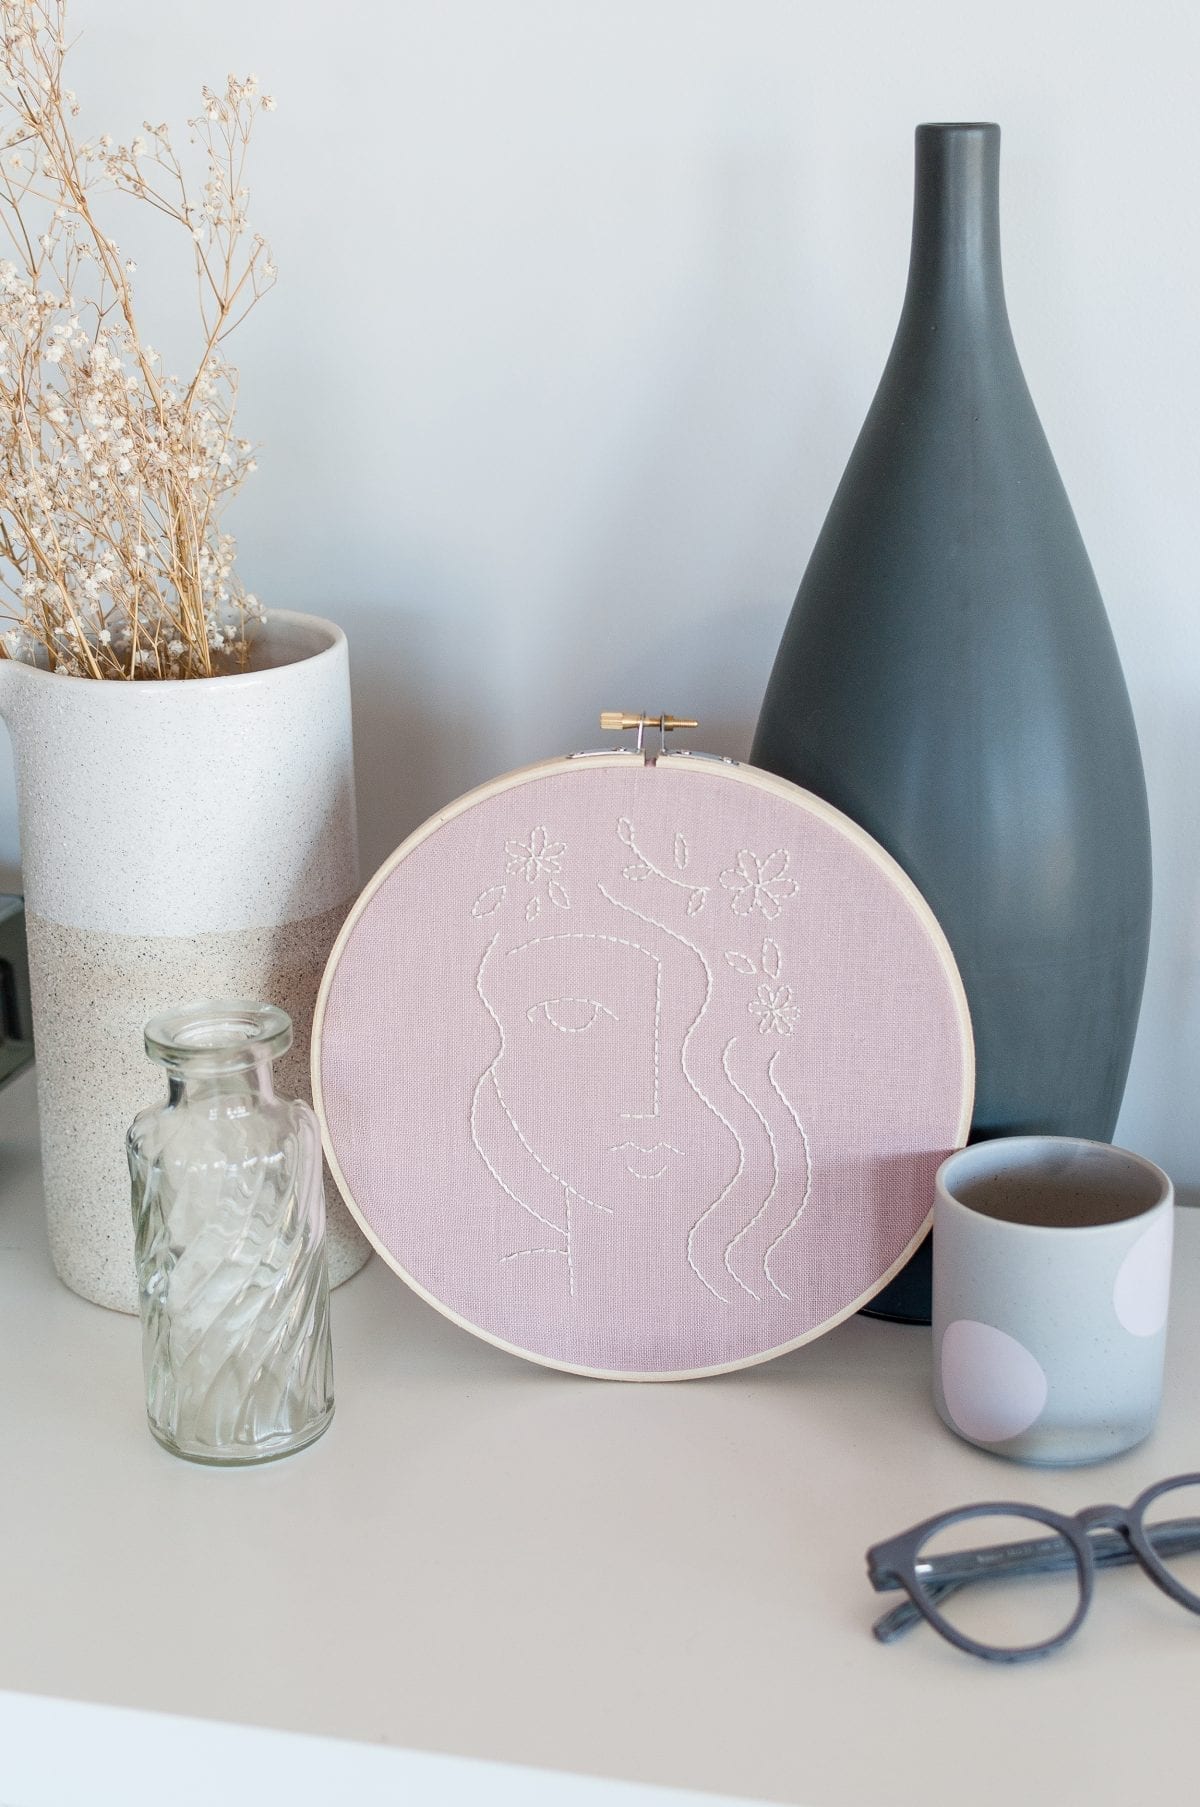 Flora Embroidery kit & Pattern